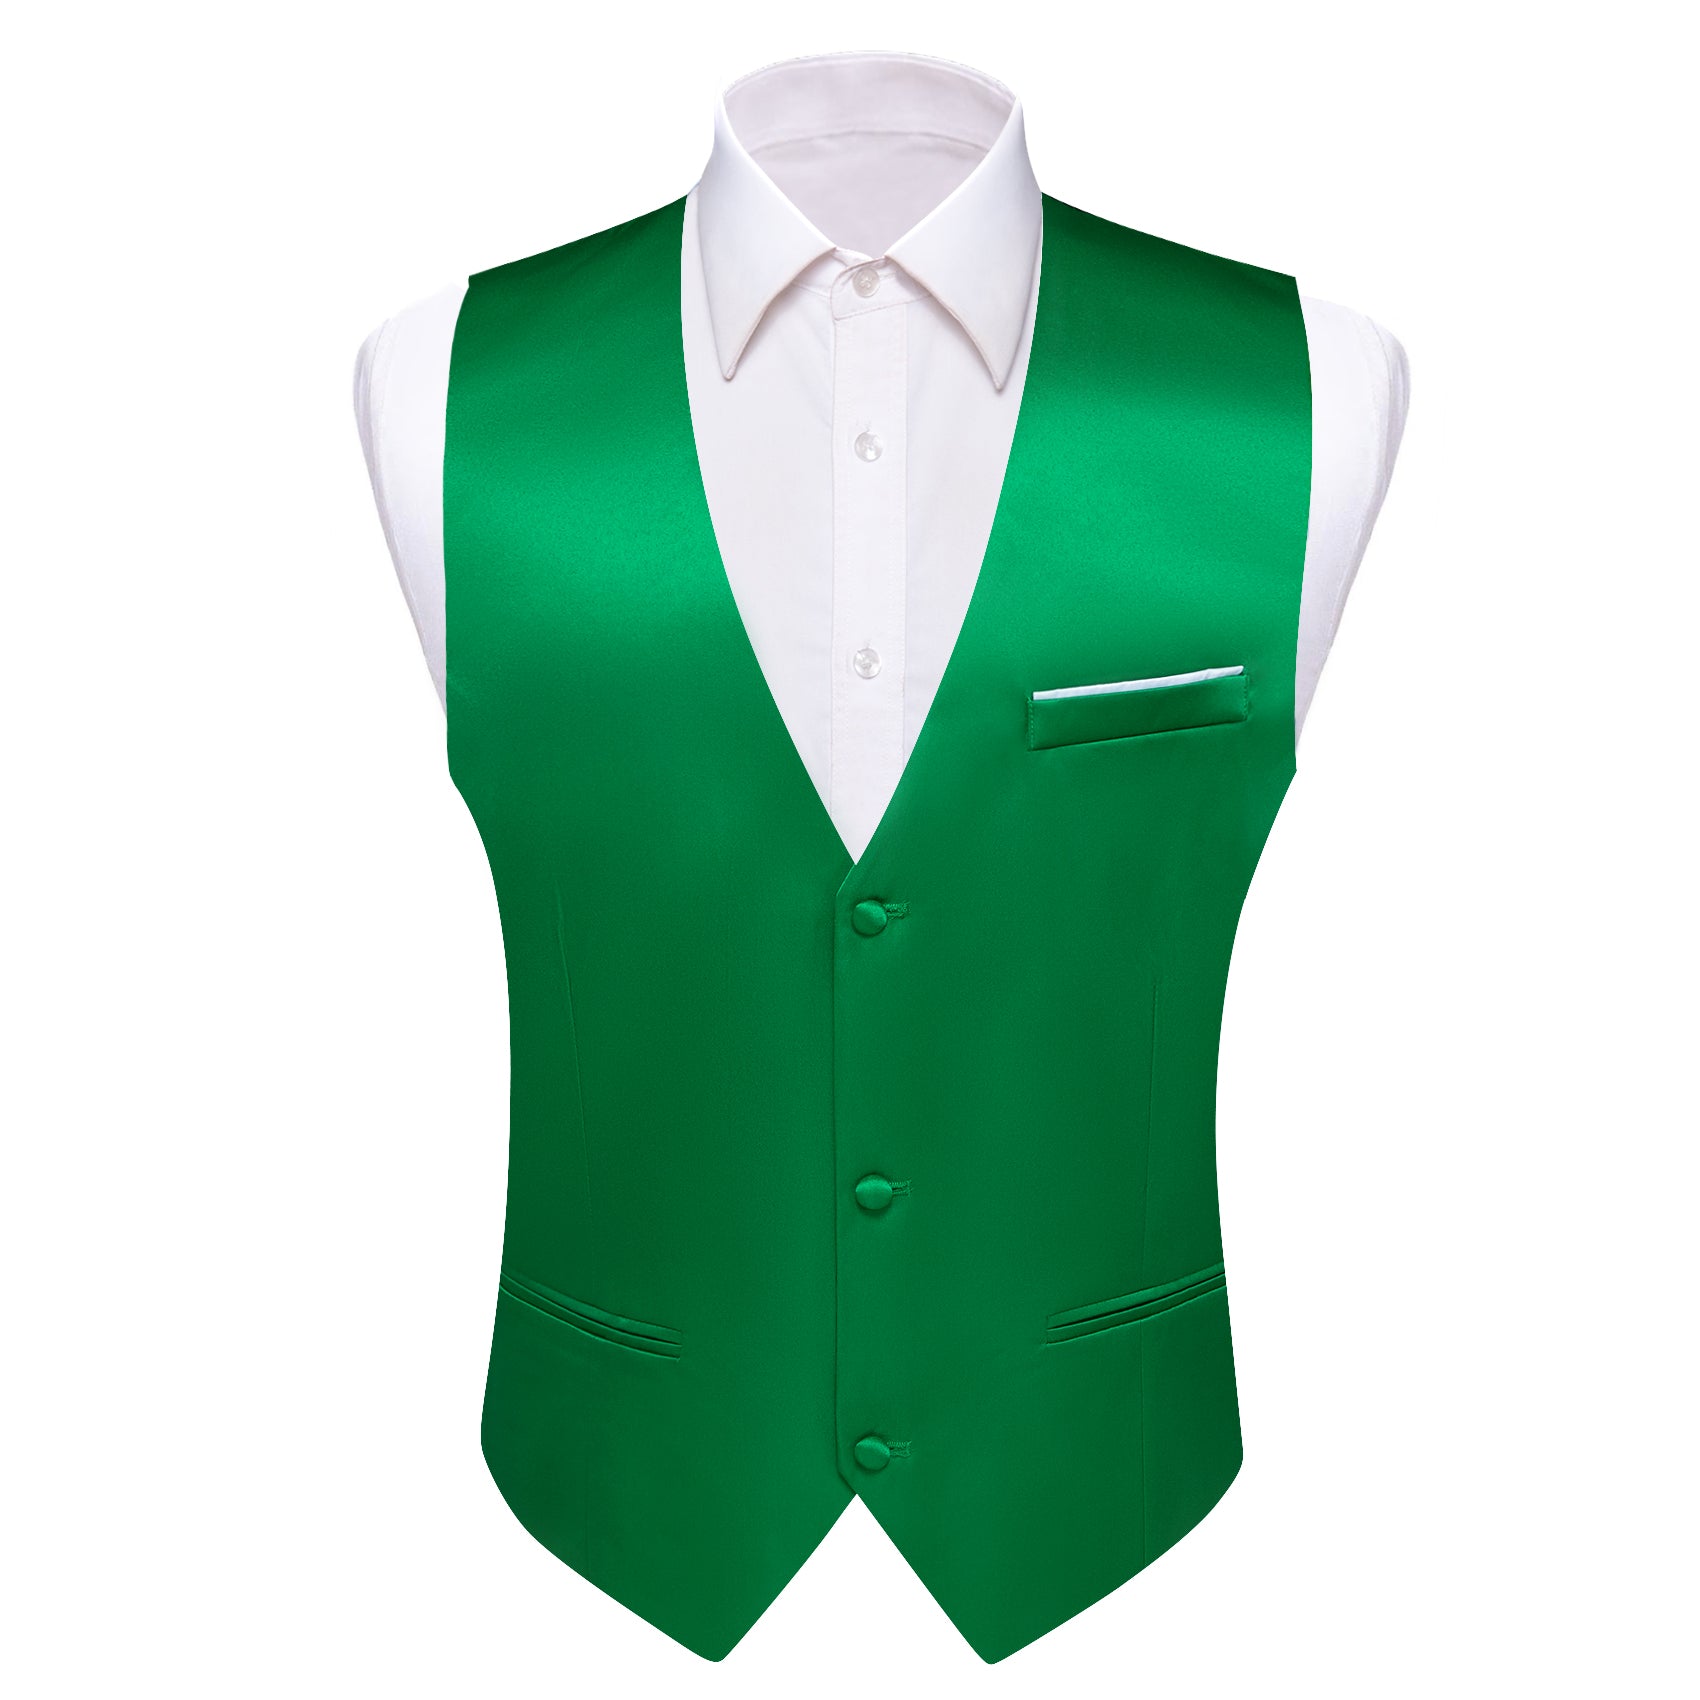 Barry.wang Men's Vest Lime Green Solid Silk Vest Bow Tie Set Business